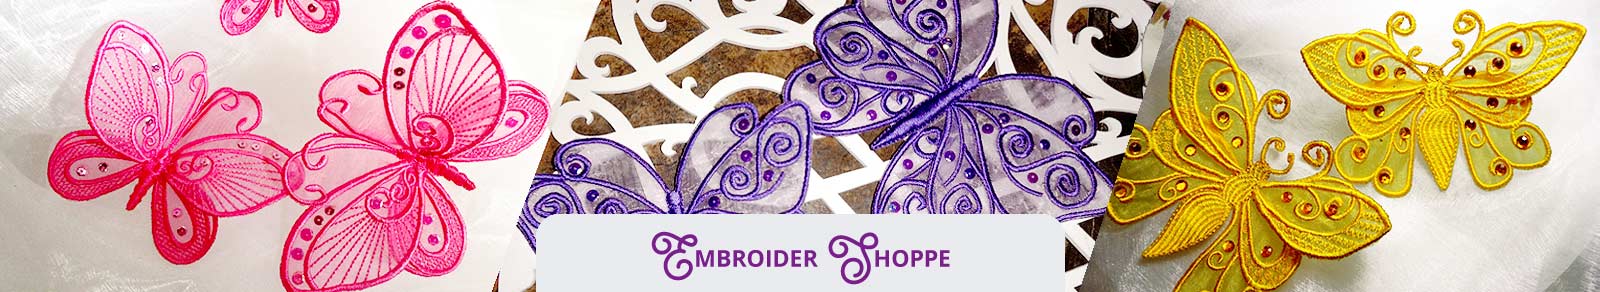 Embroider Shoppe